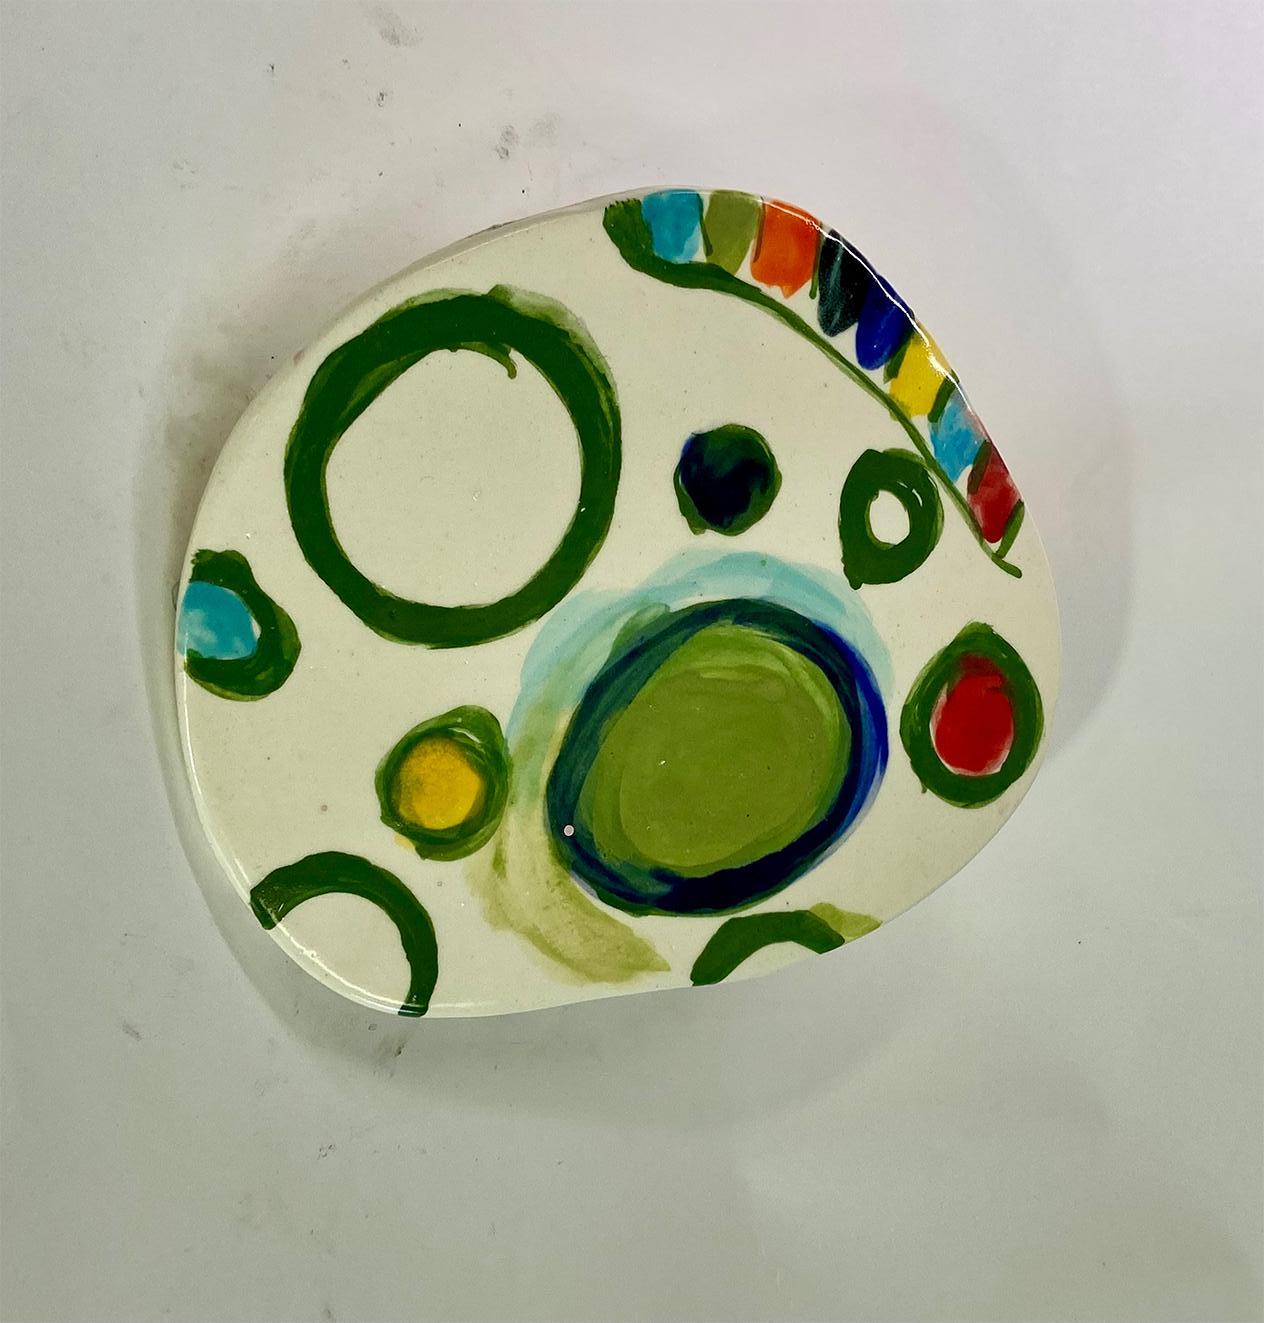 Untitled XXIII, by Charo Oquet
Glazed ceramic and enamel
Overall size: 27.5 H in x 24.5 W in.
Set of 14 Glazed Ceramic Discs
Individual size: 
1. 3.5” x 3.5” x 0.25